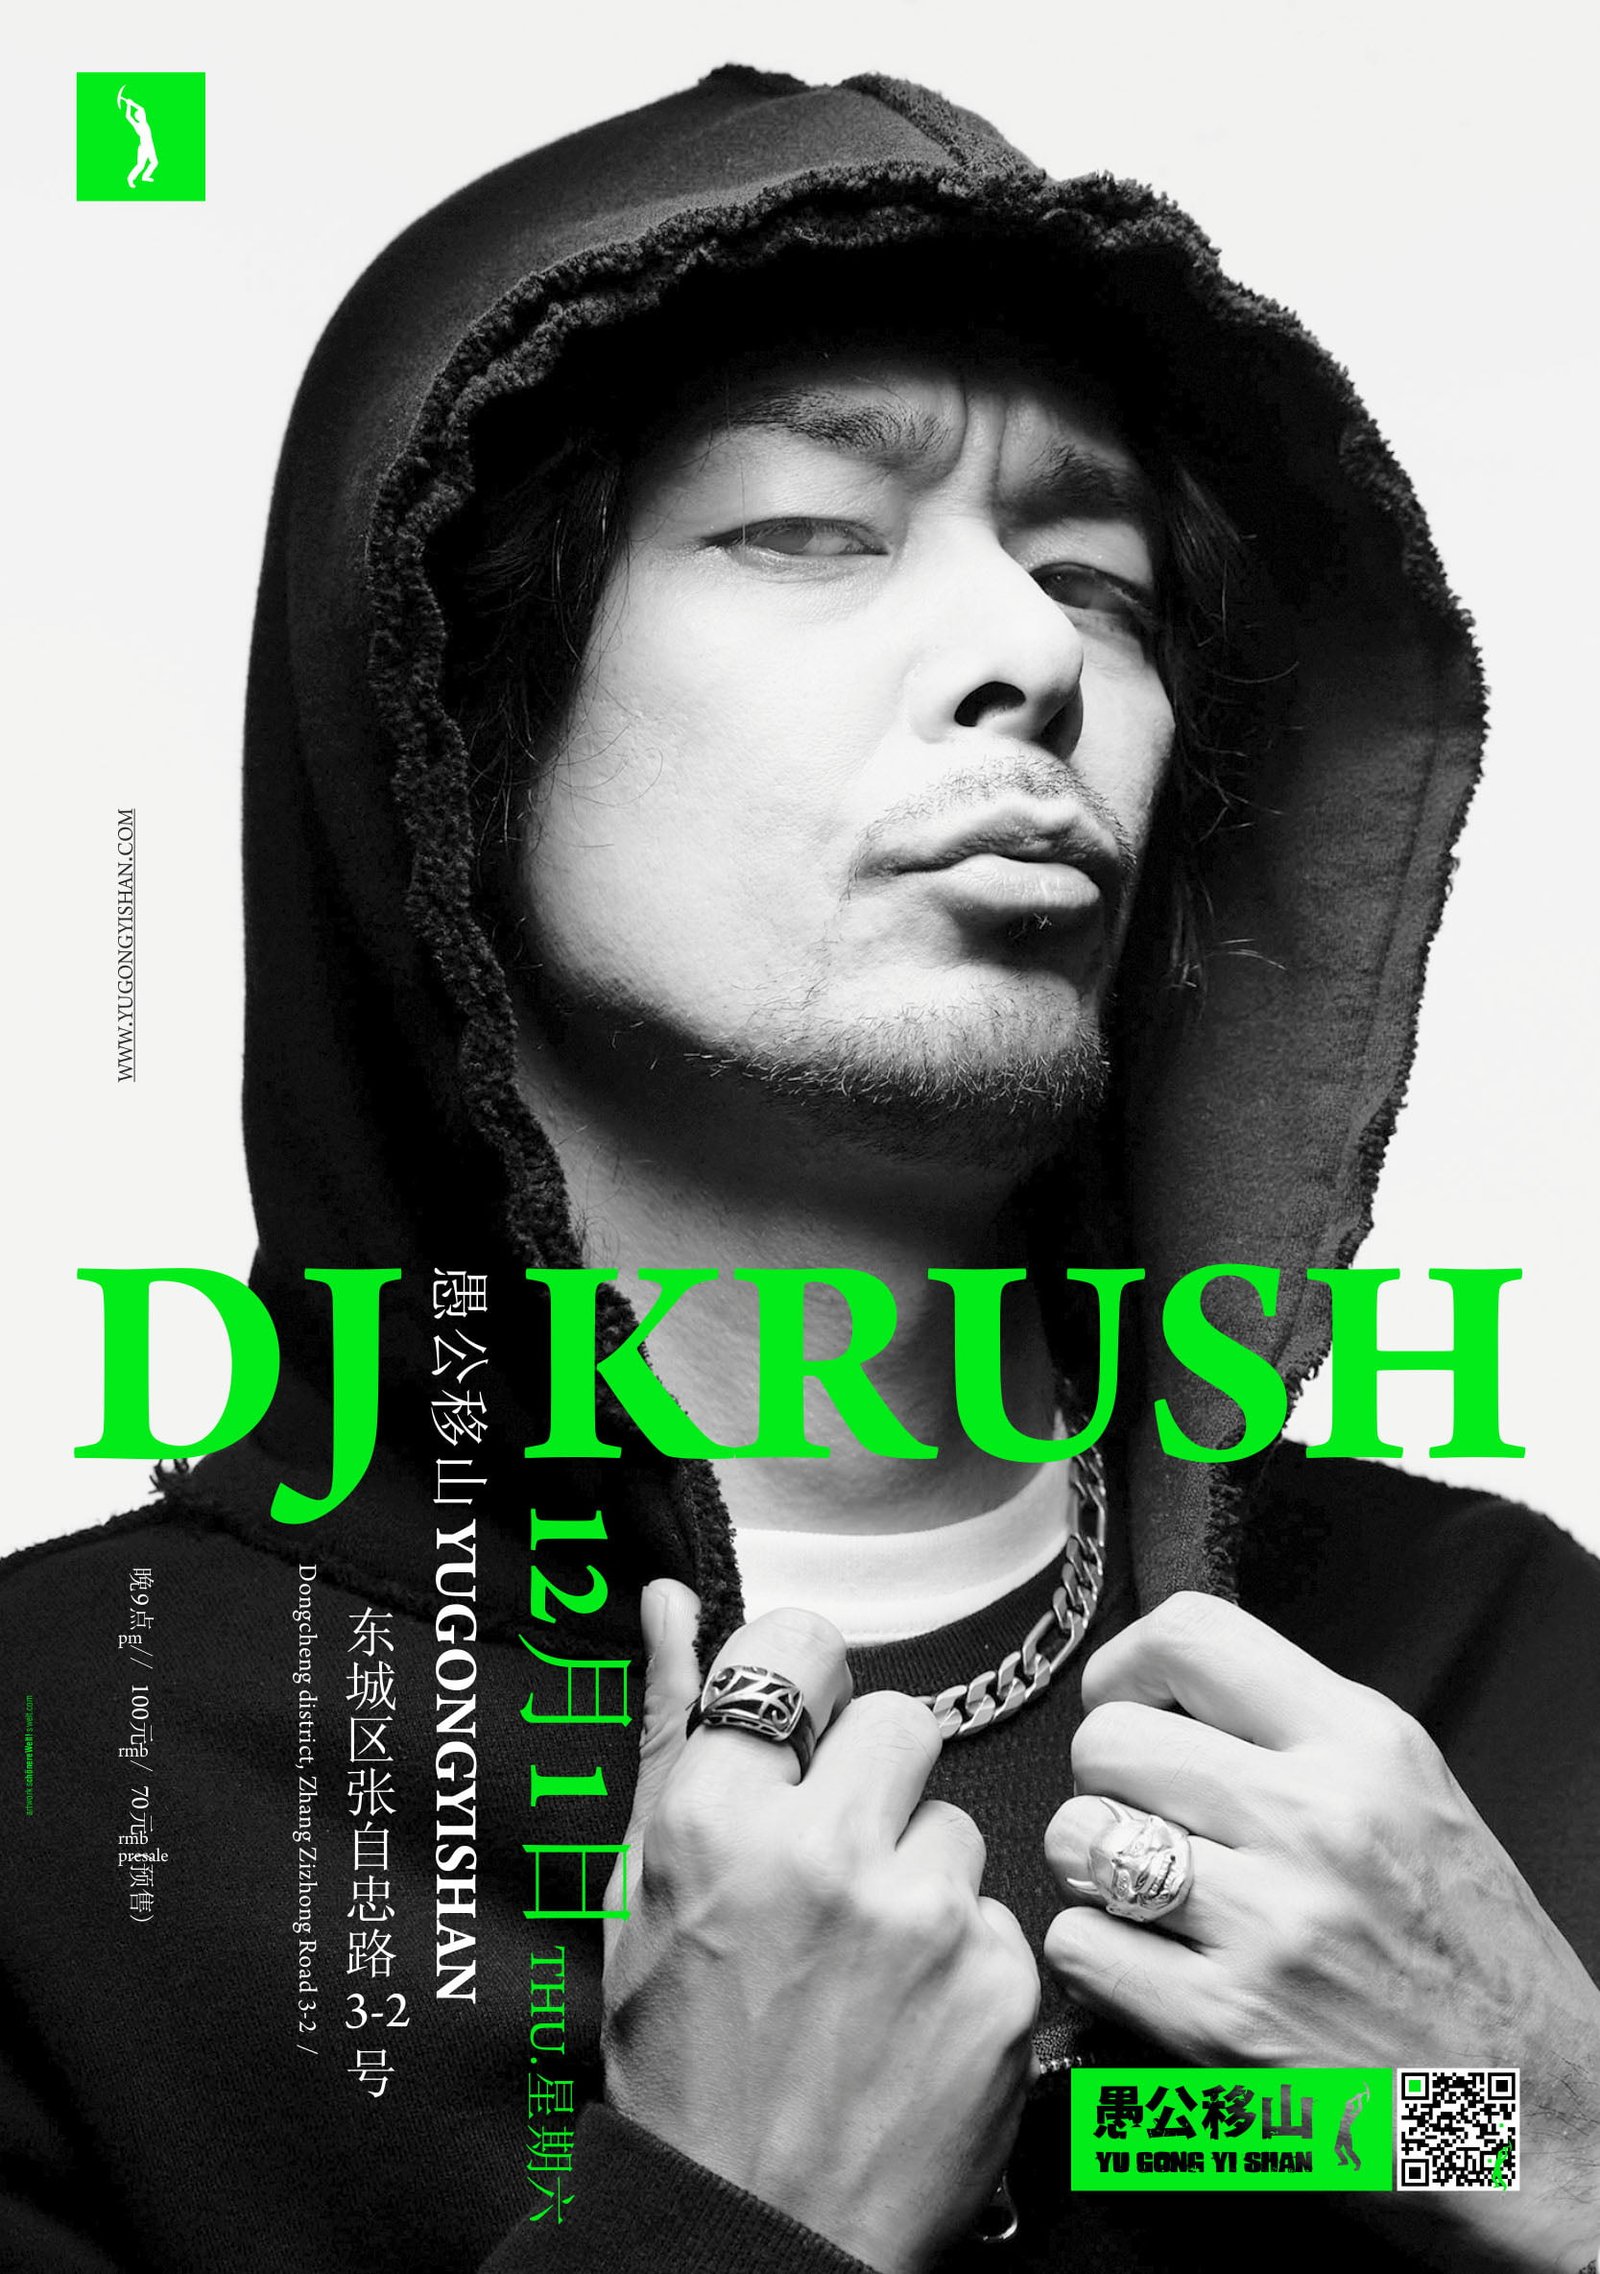 poster a1 for dj krush in china 2011 by schönereWelt! swelt.com